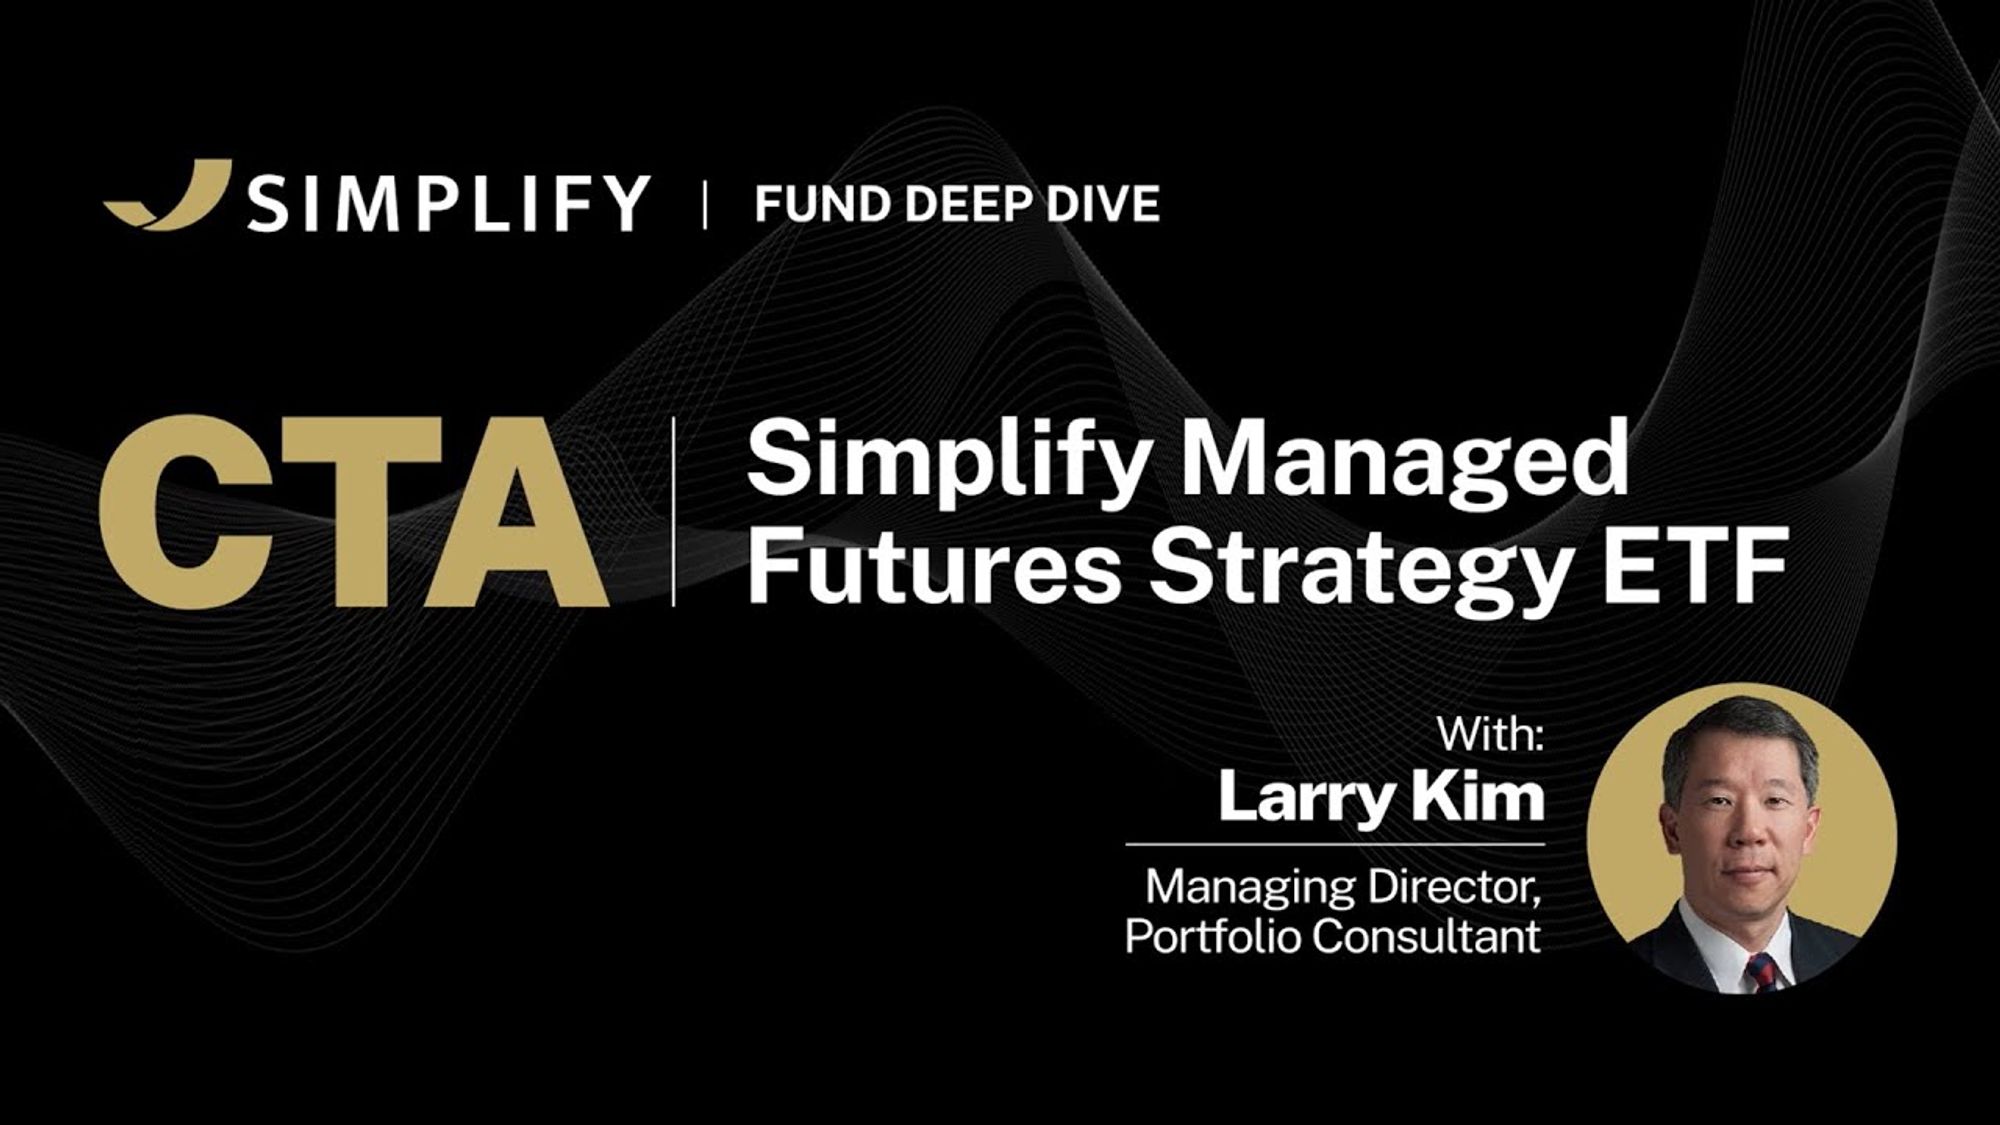 Simplify CTA Fund Deep Dive